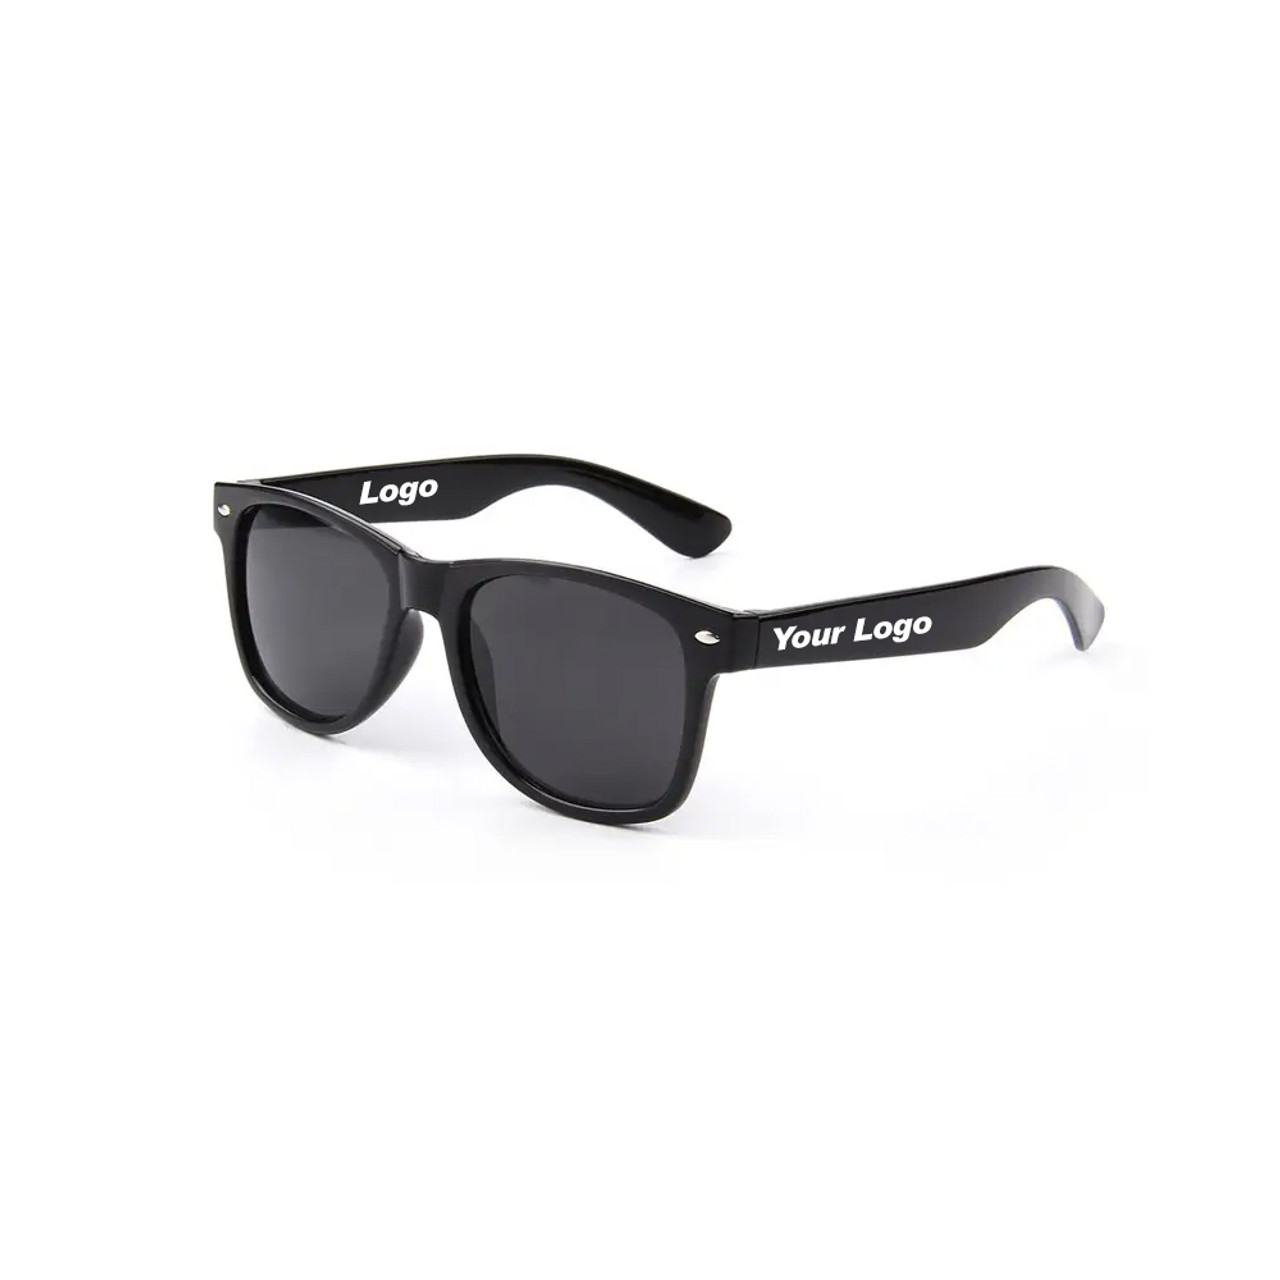 Custom Party Sunglasses with Logo Lens Designs